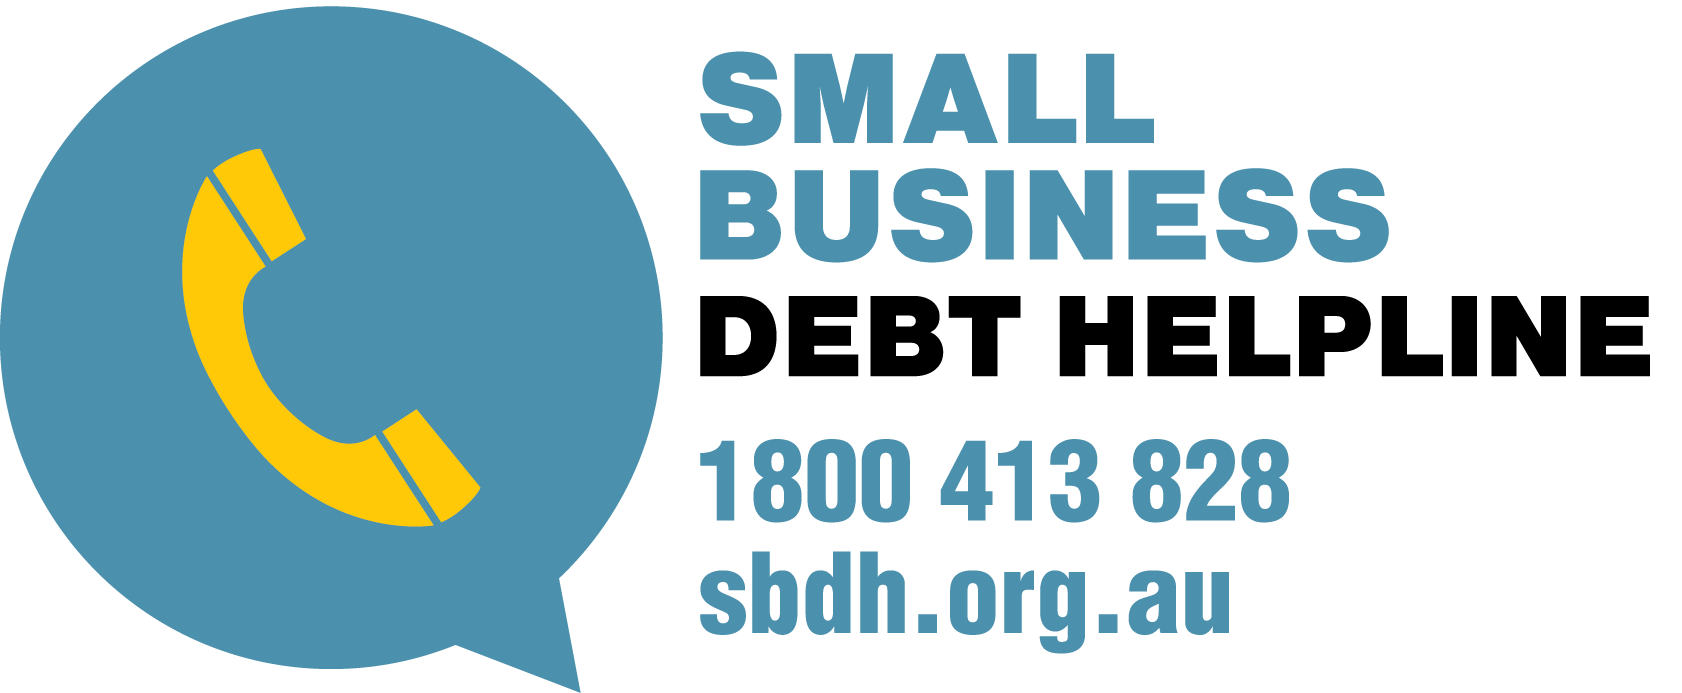 Small Business Debt Helpline